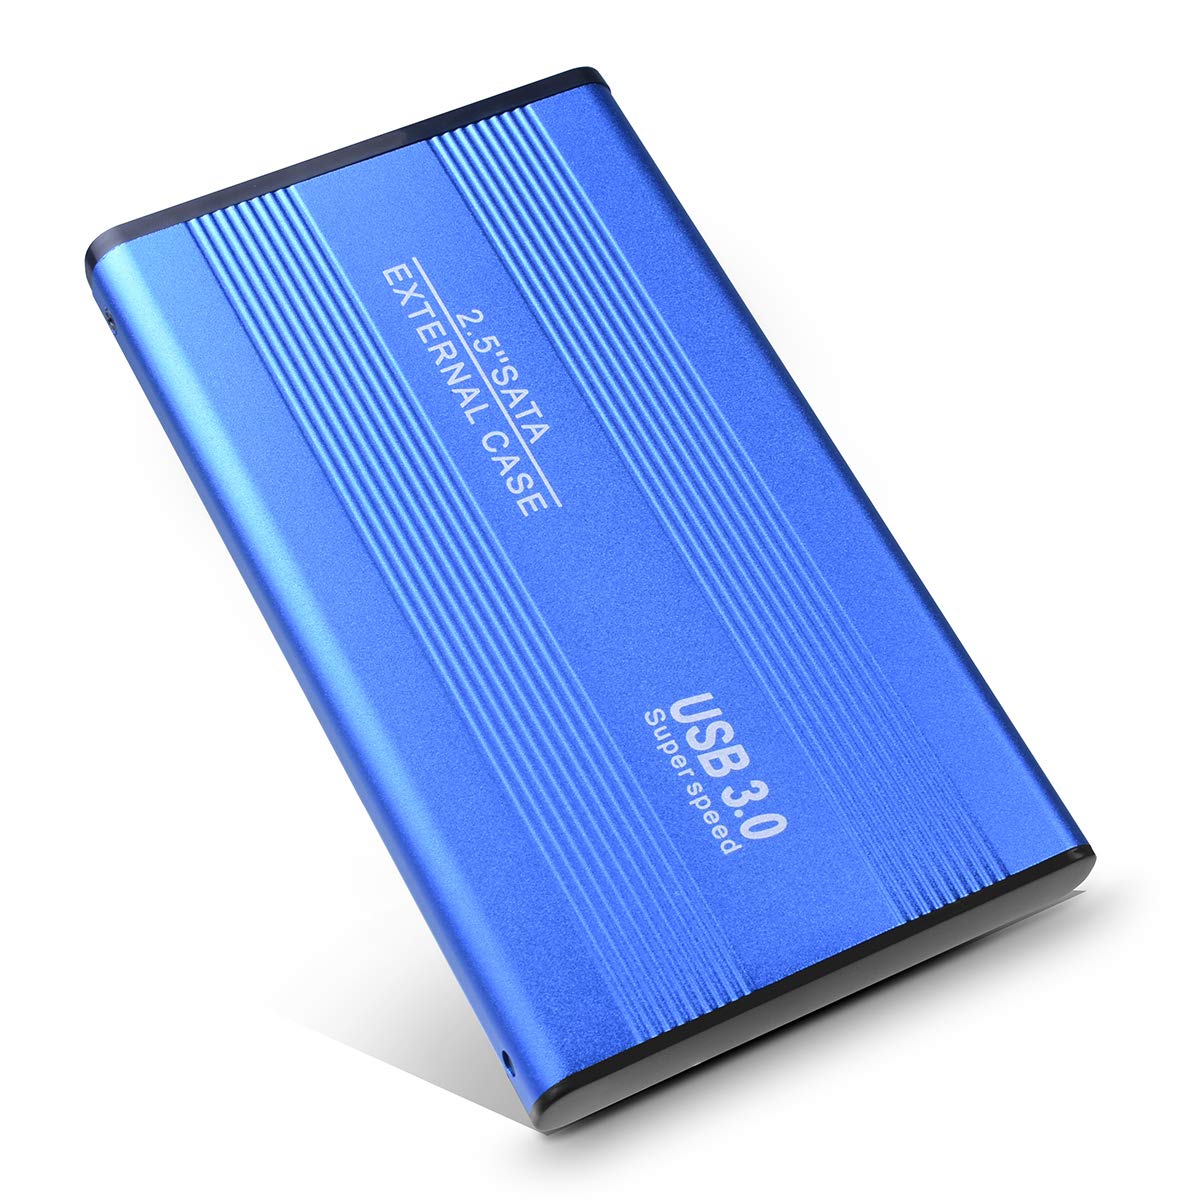 Prode 2 TB External Hard Drive Portable USB 3.0 SATA 2.5